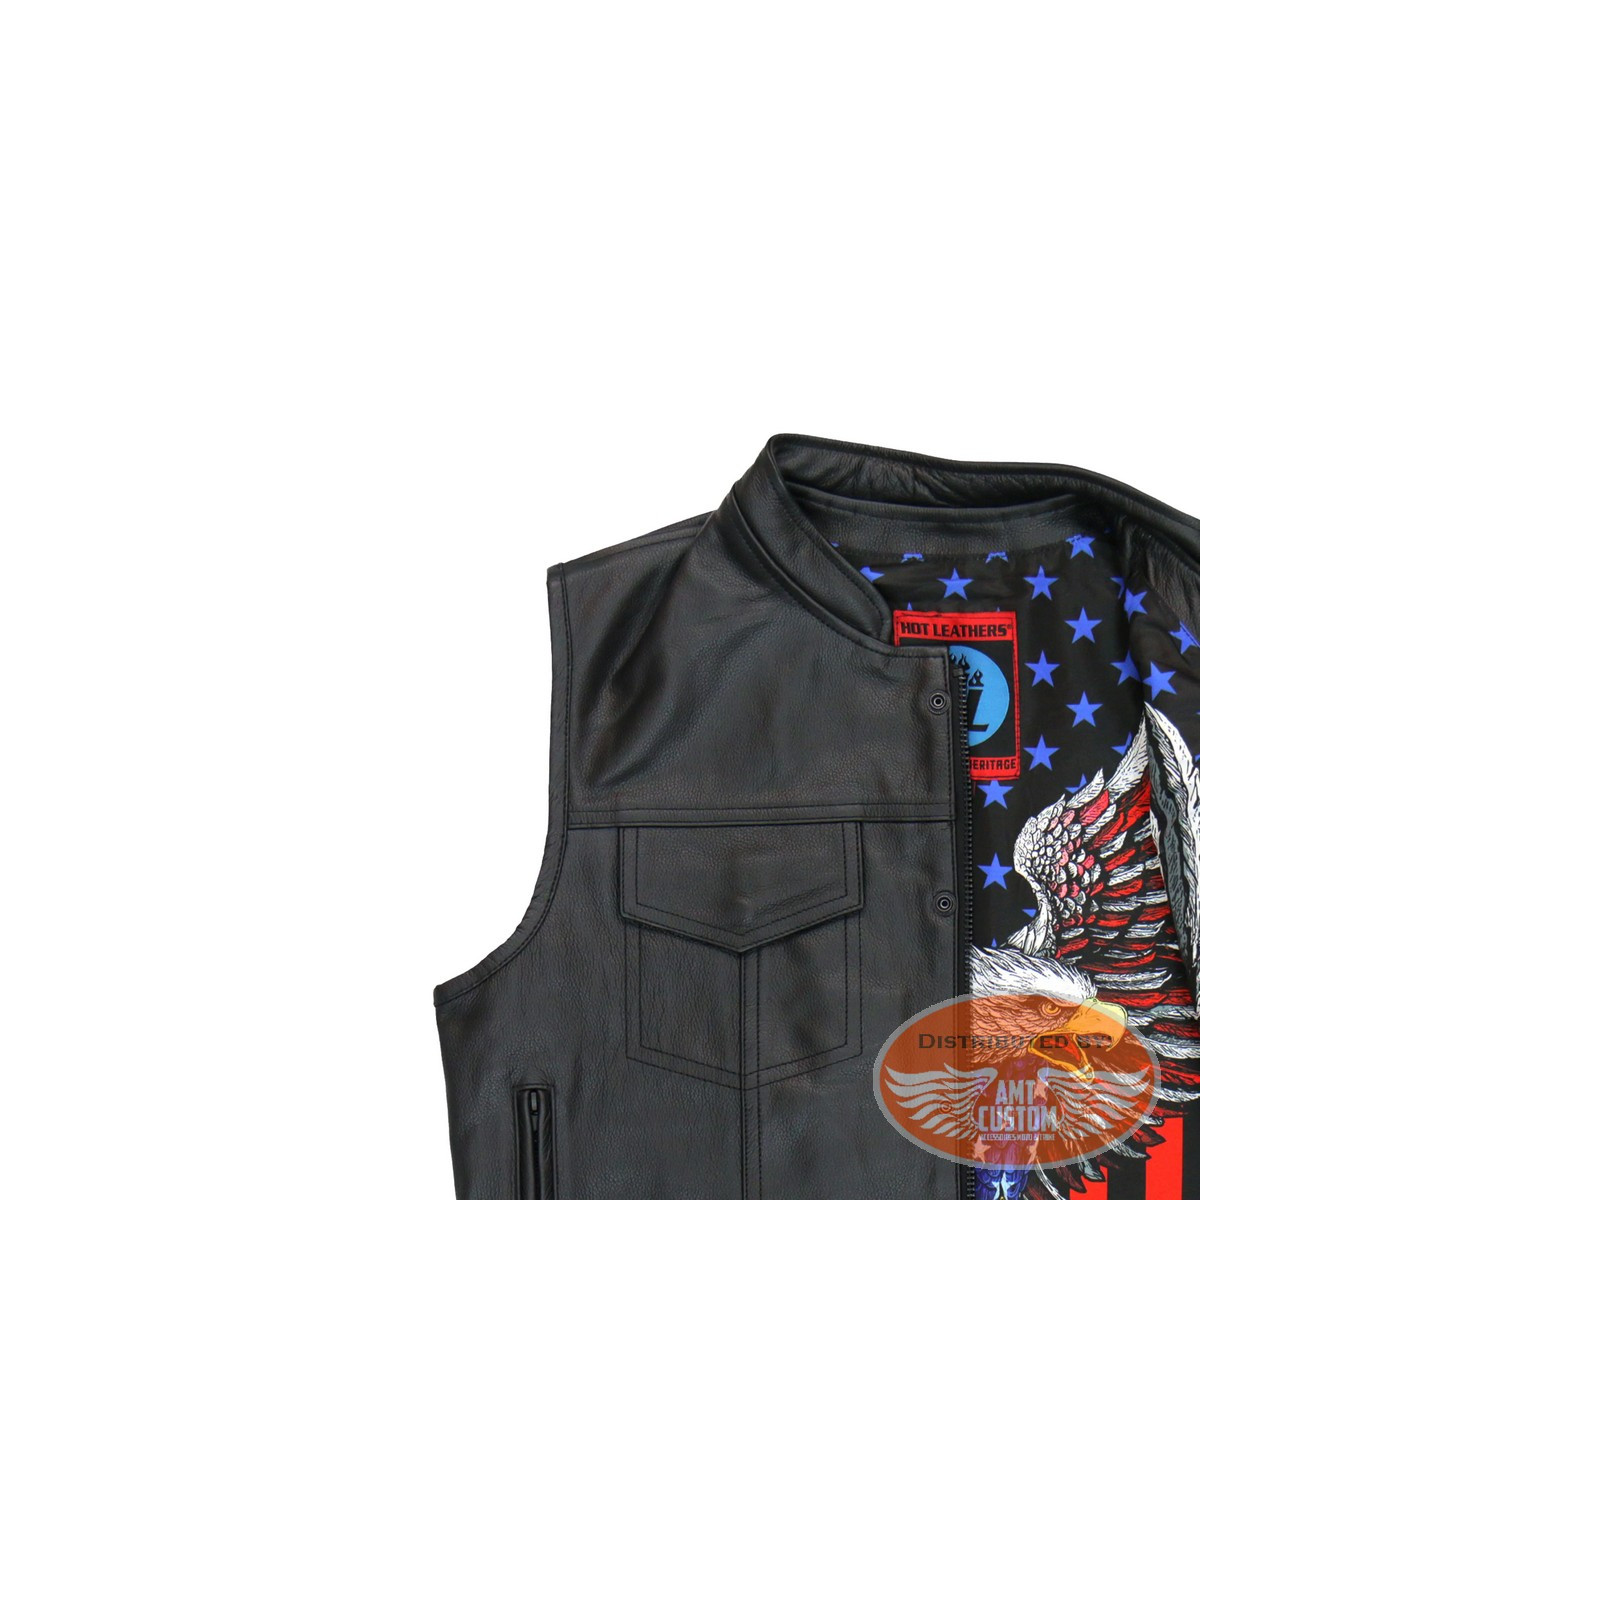 Custom Leather Motorcycle Vest